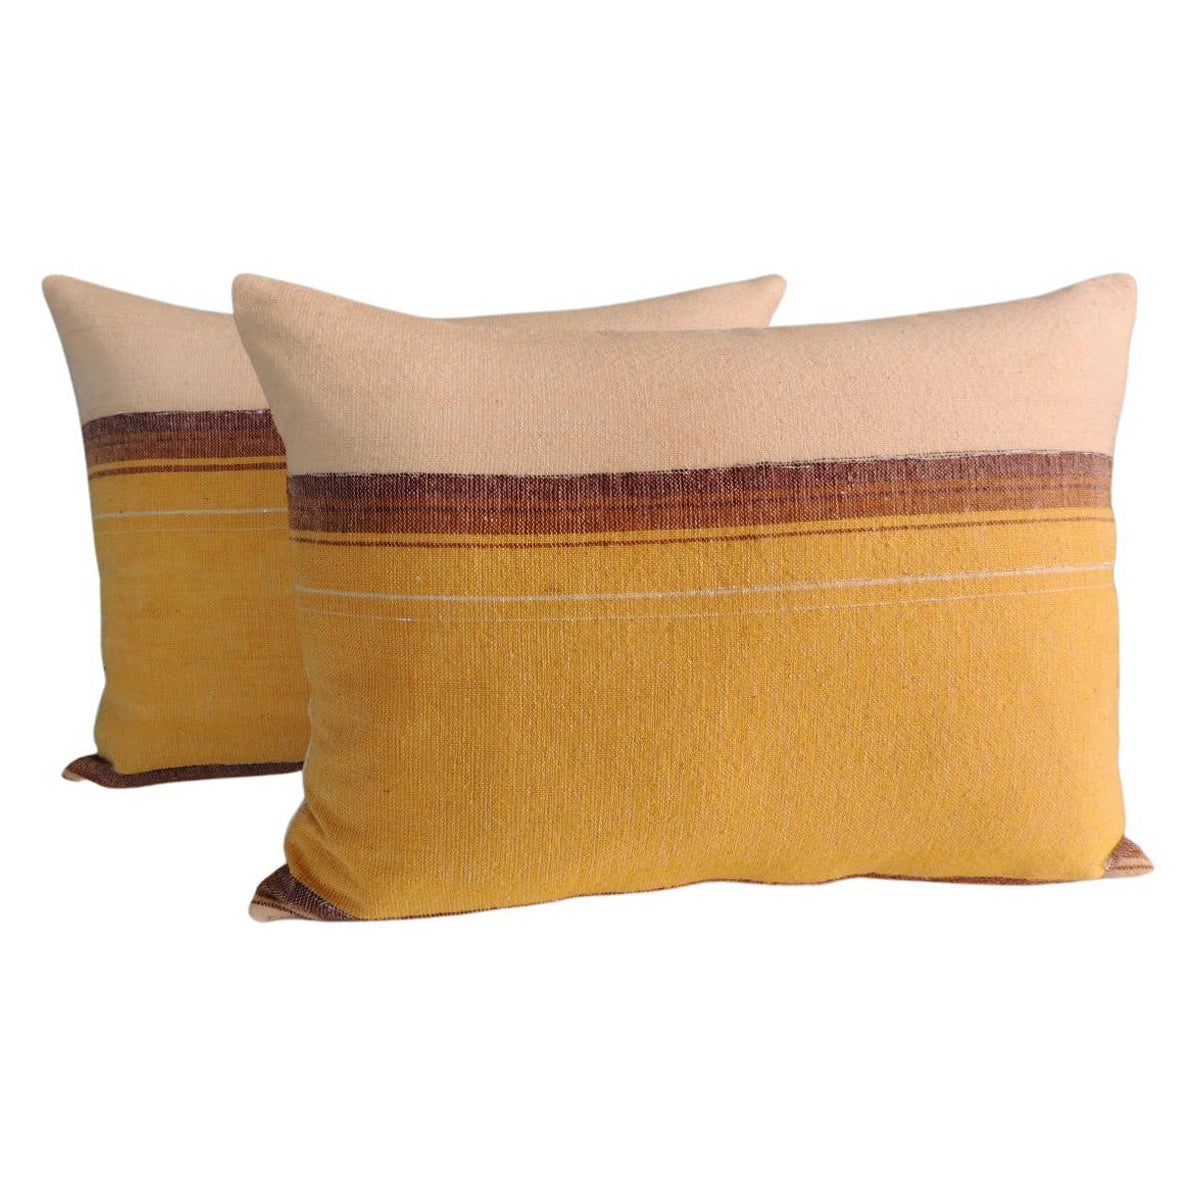 Pair of Decorative Bolster Pillows